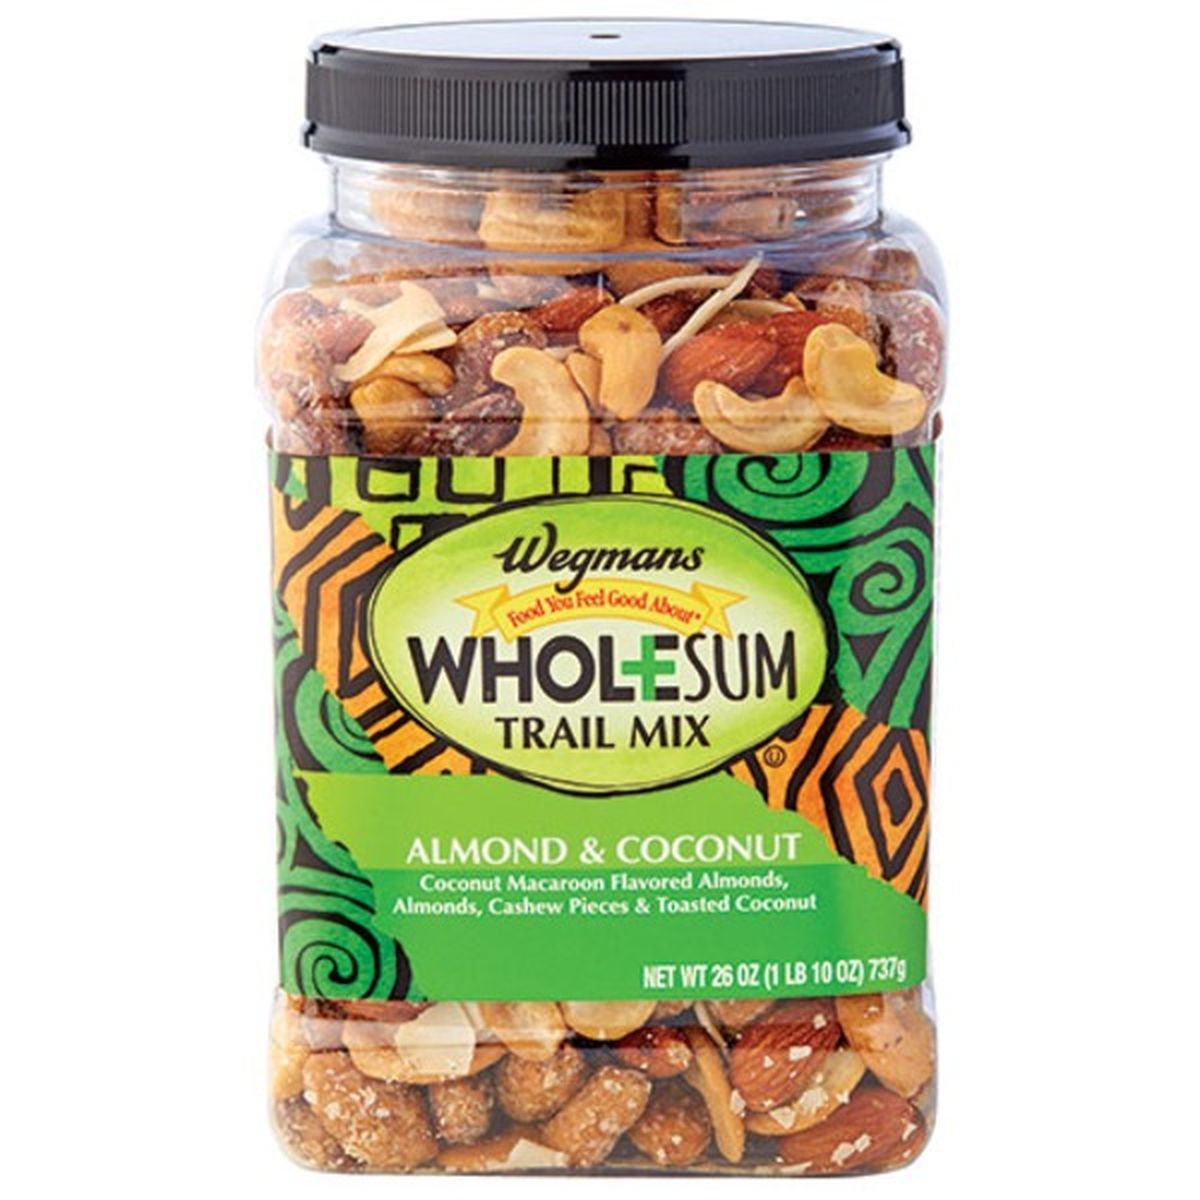 Calories in Wegmans Almond & Coconut Wholesum Trail Mix